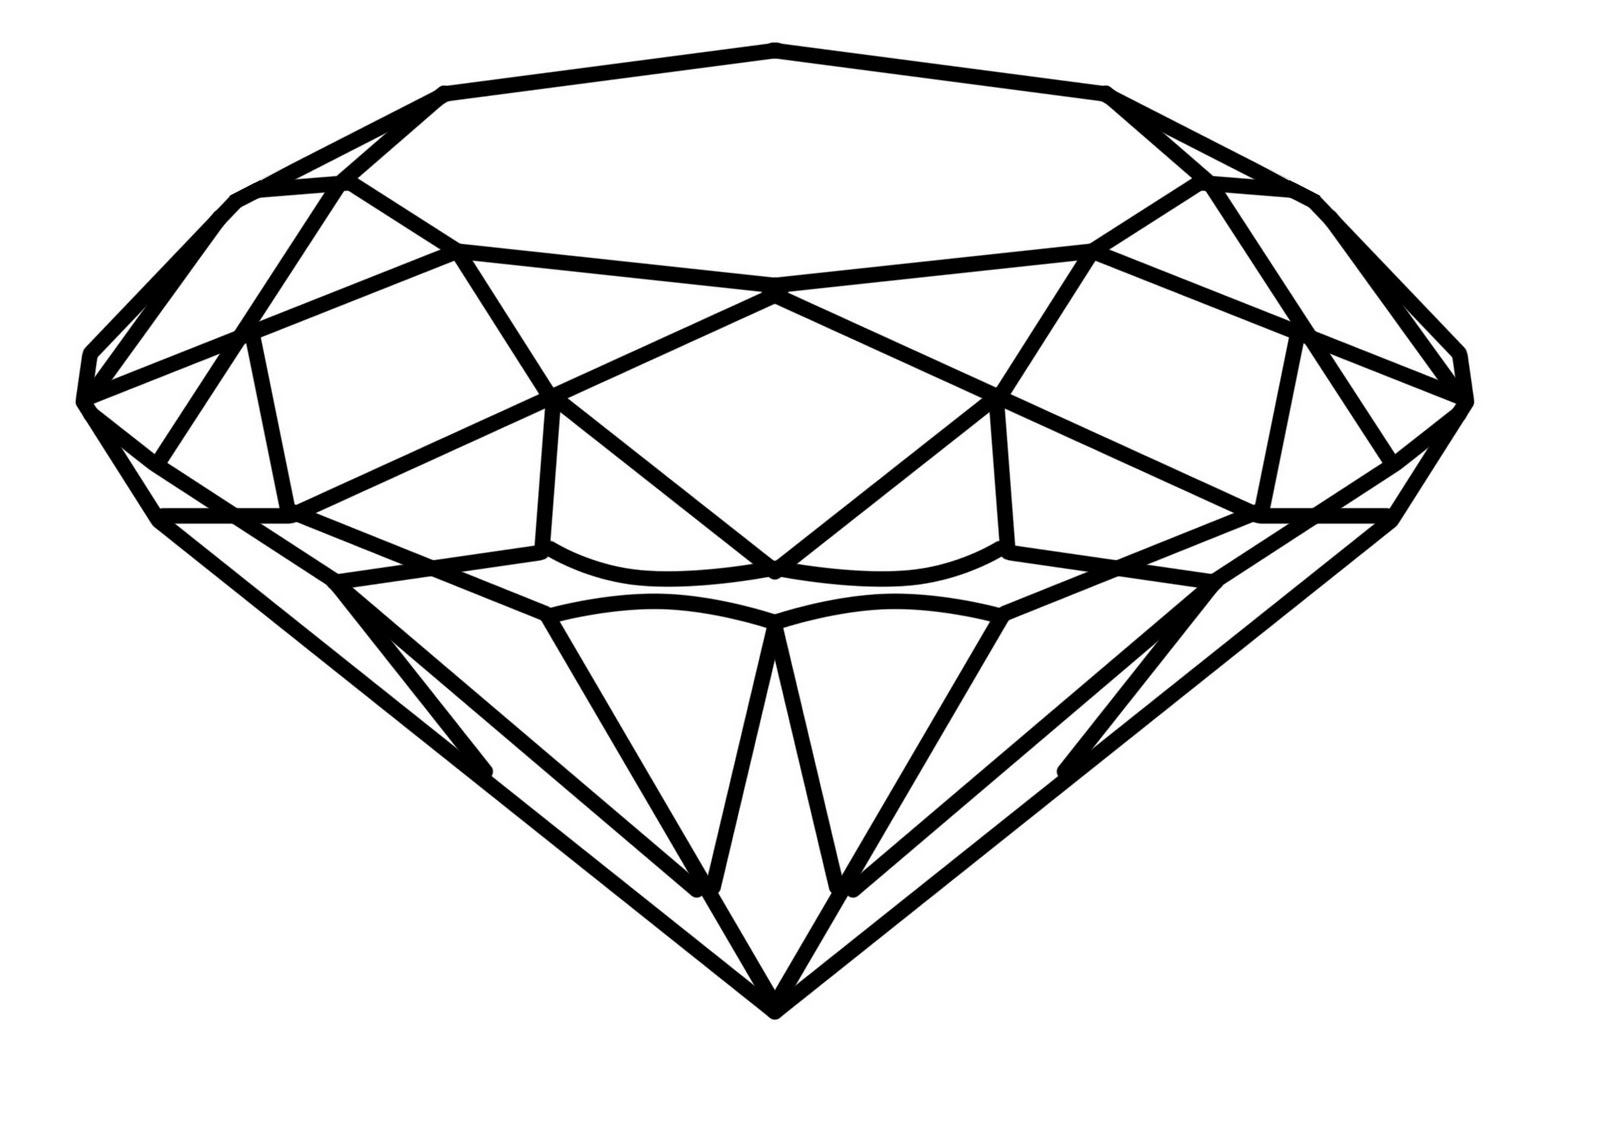 Diamond logo clipart 2